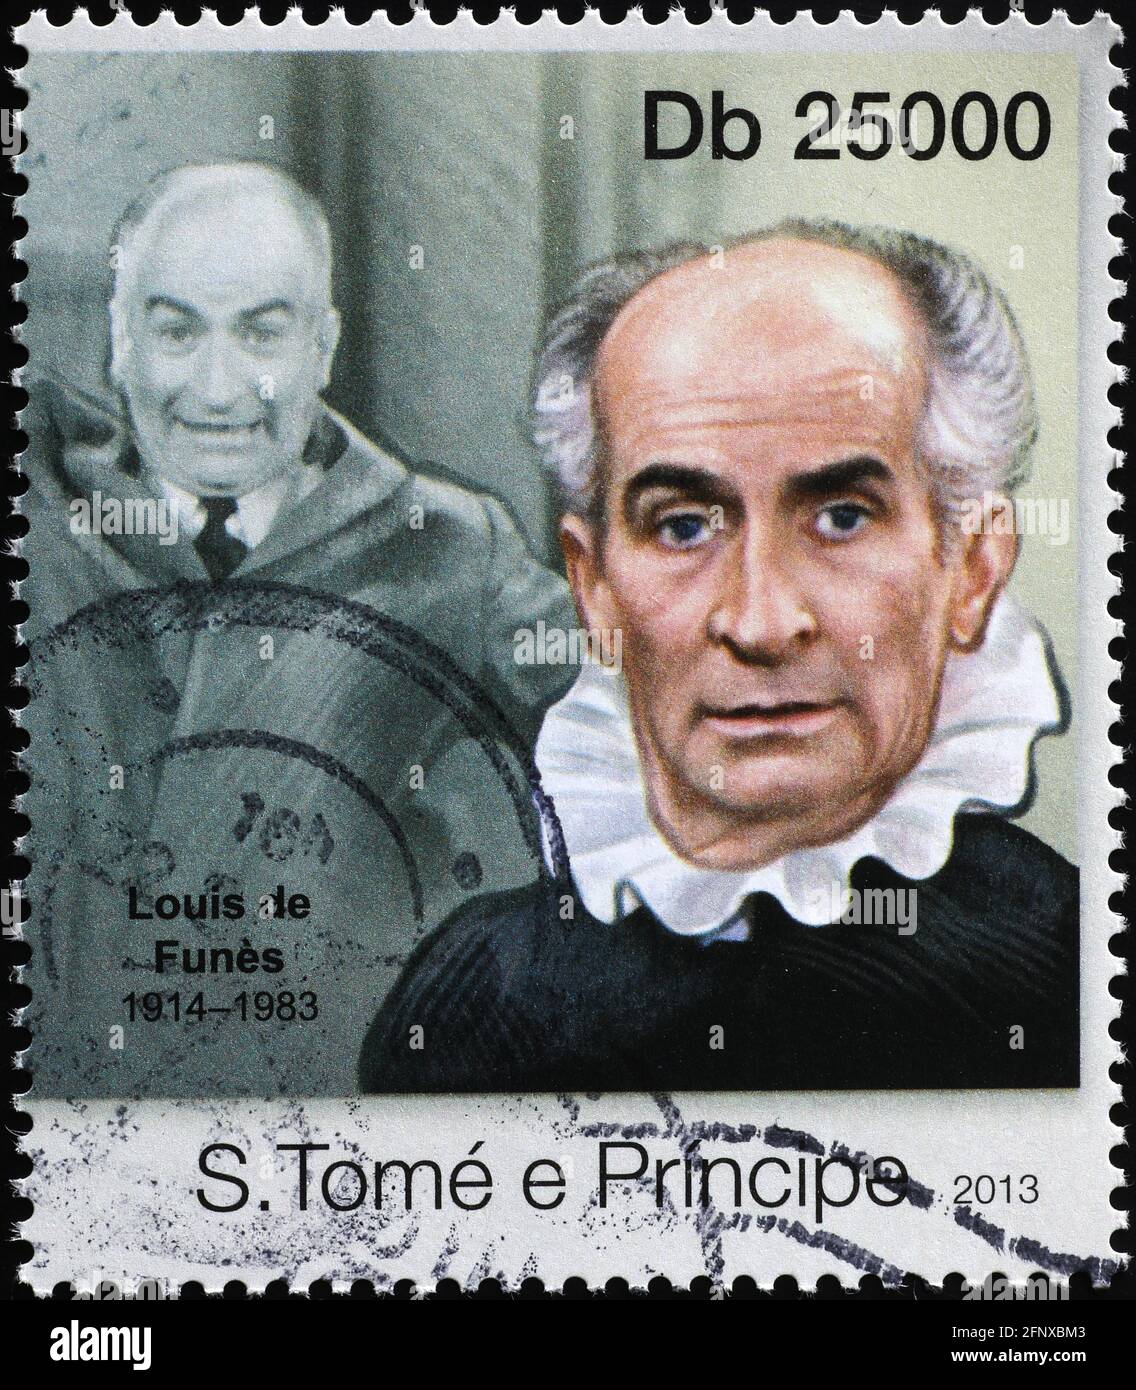 Louis de Funes personaggi sul francobollo Foto Stock